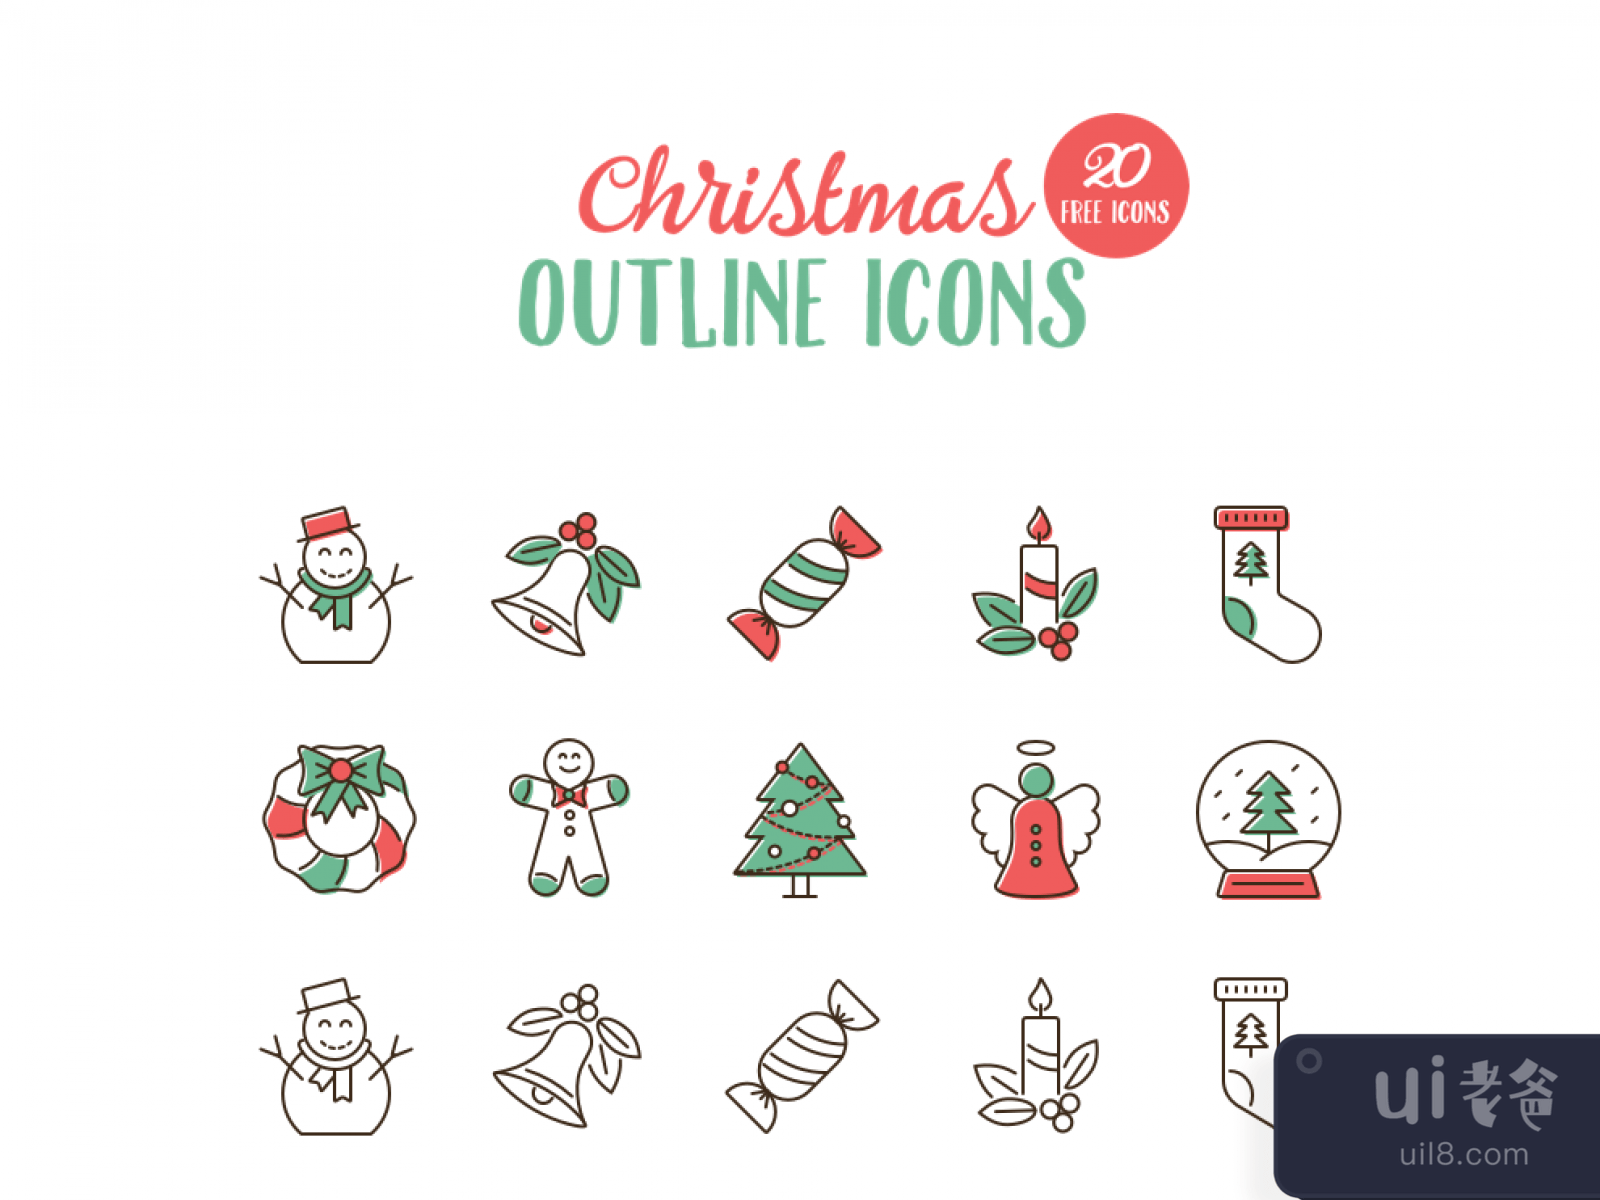 20 Christmas Outline Icons for Figma and Adobe XD No 1